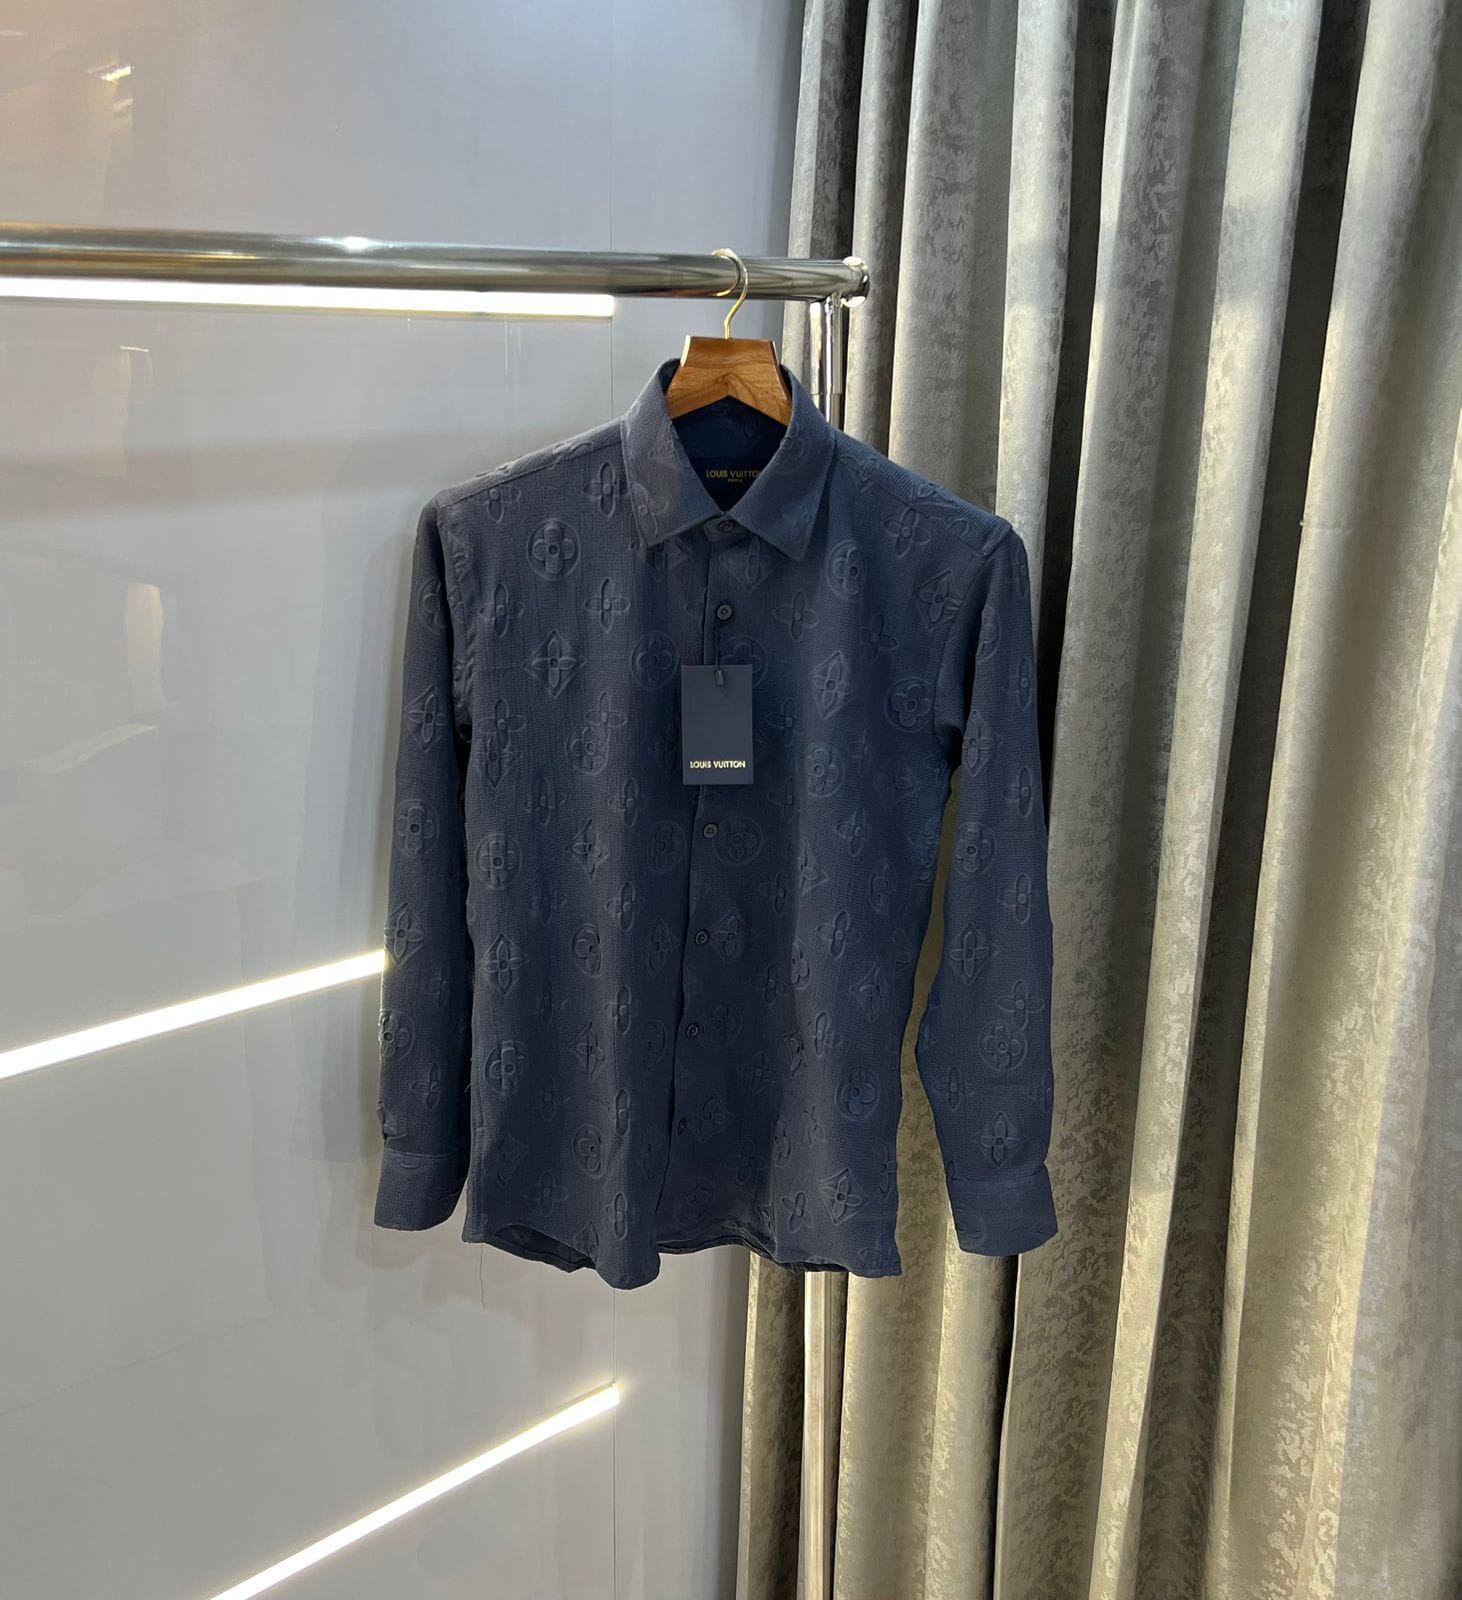 Louis Vuitton Embossed LV T-Shirt, Blue, M